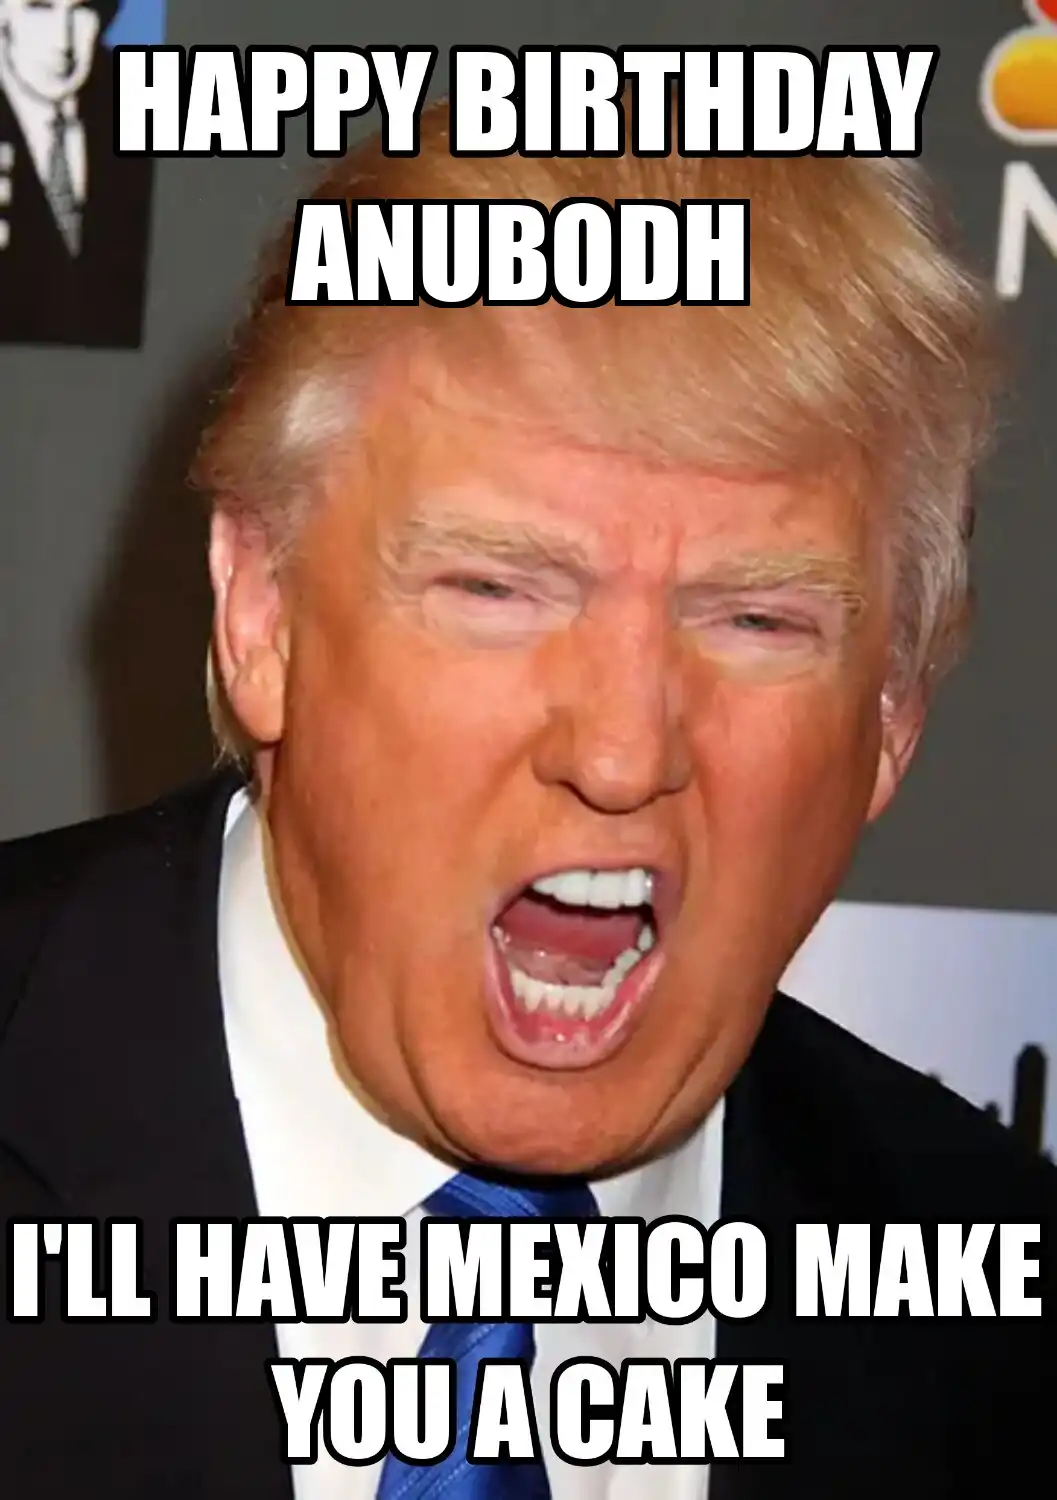 Happy Birthday Anubodh Mexico Make You A Cake Meme